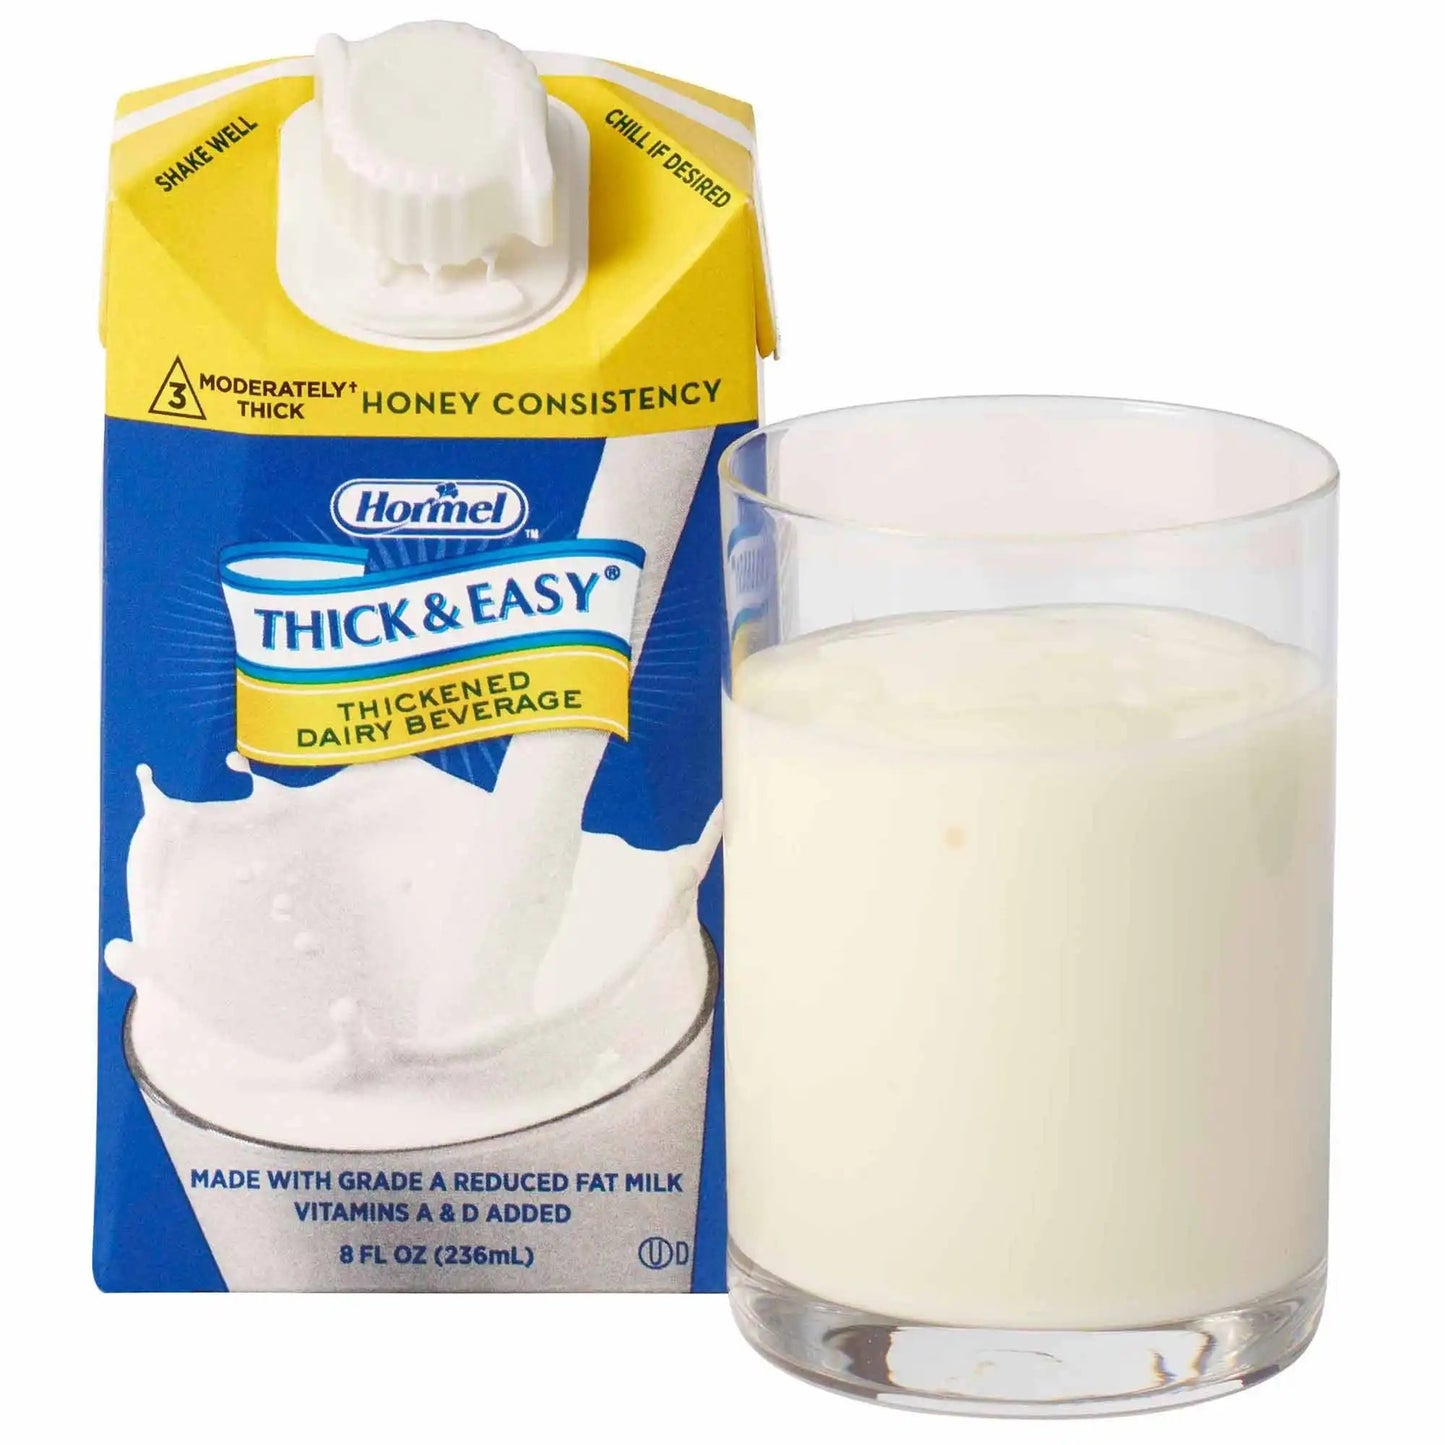 Thick & Easy Dairy Honey Consistency Milk Thickened Beverage, 8 oz. Carton